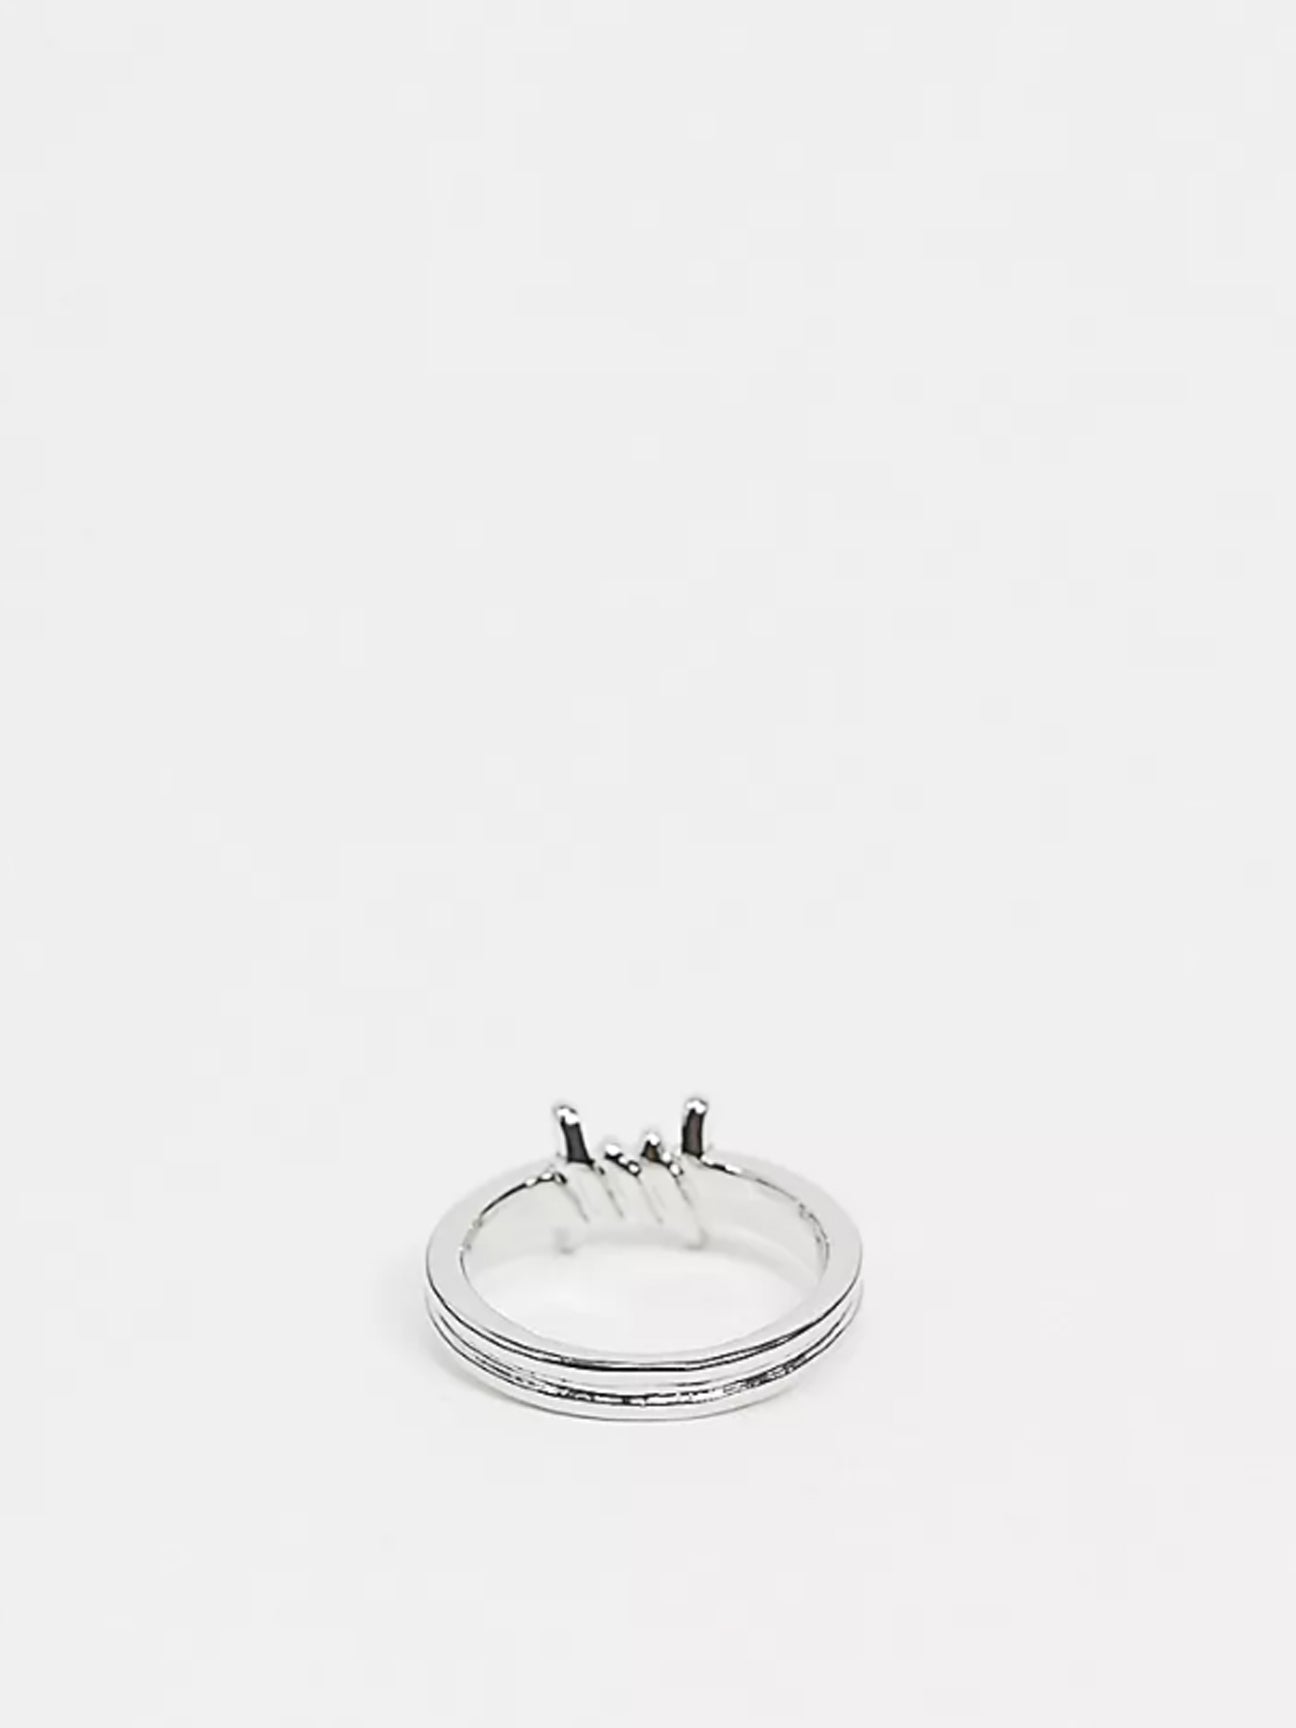 Silver Knot Ring - svnx